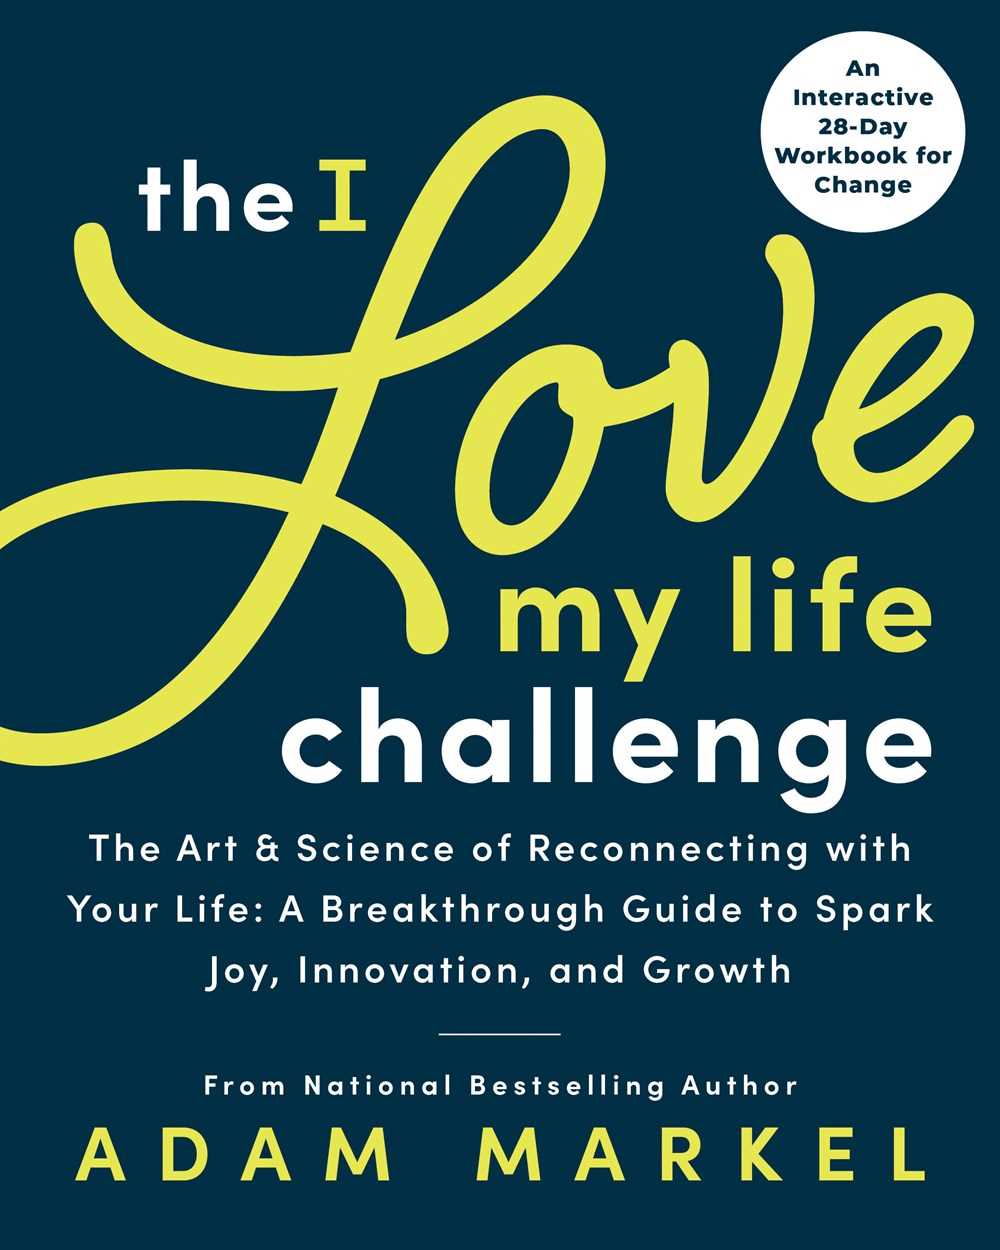 The I Love My Life Challenge